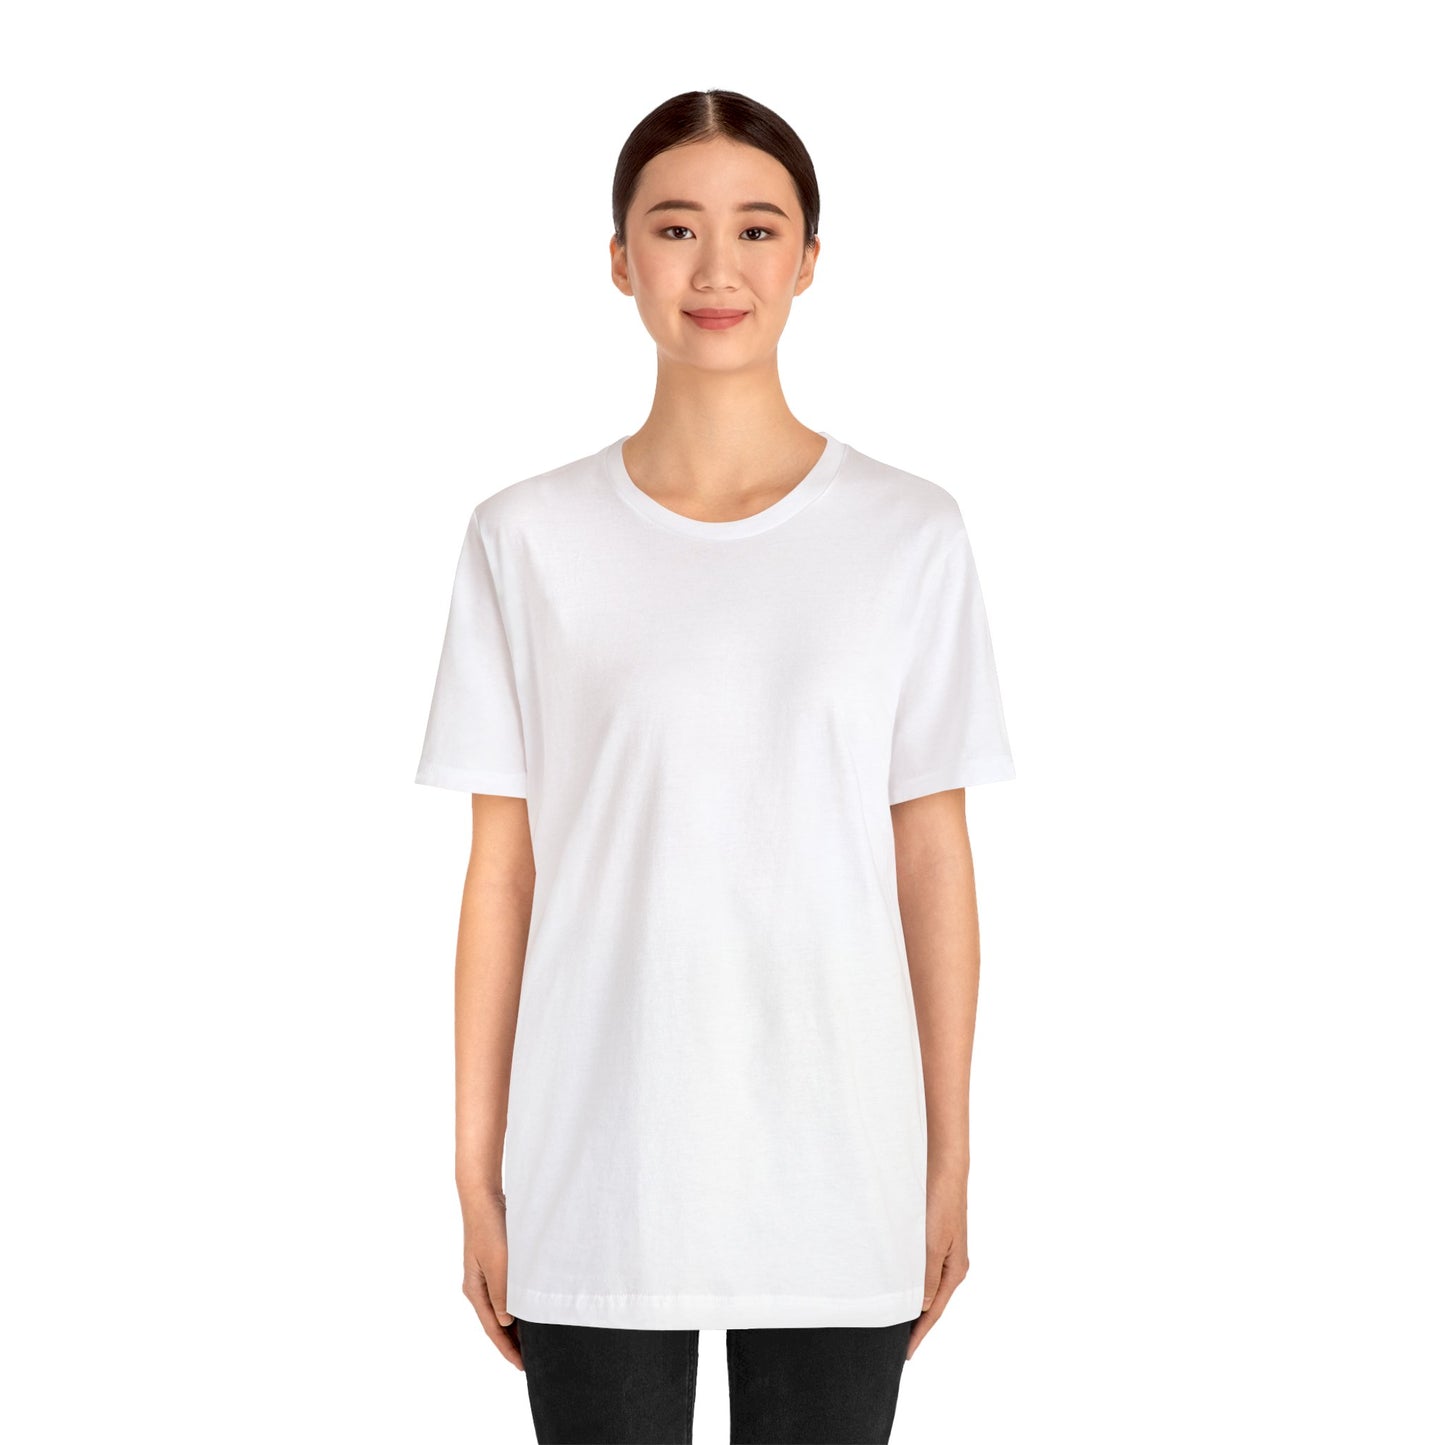 Unisex Jersey Short Sleeve White T Shirt